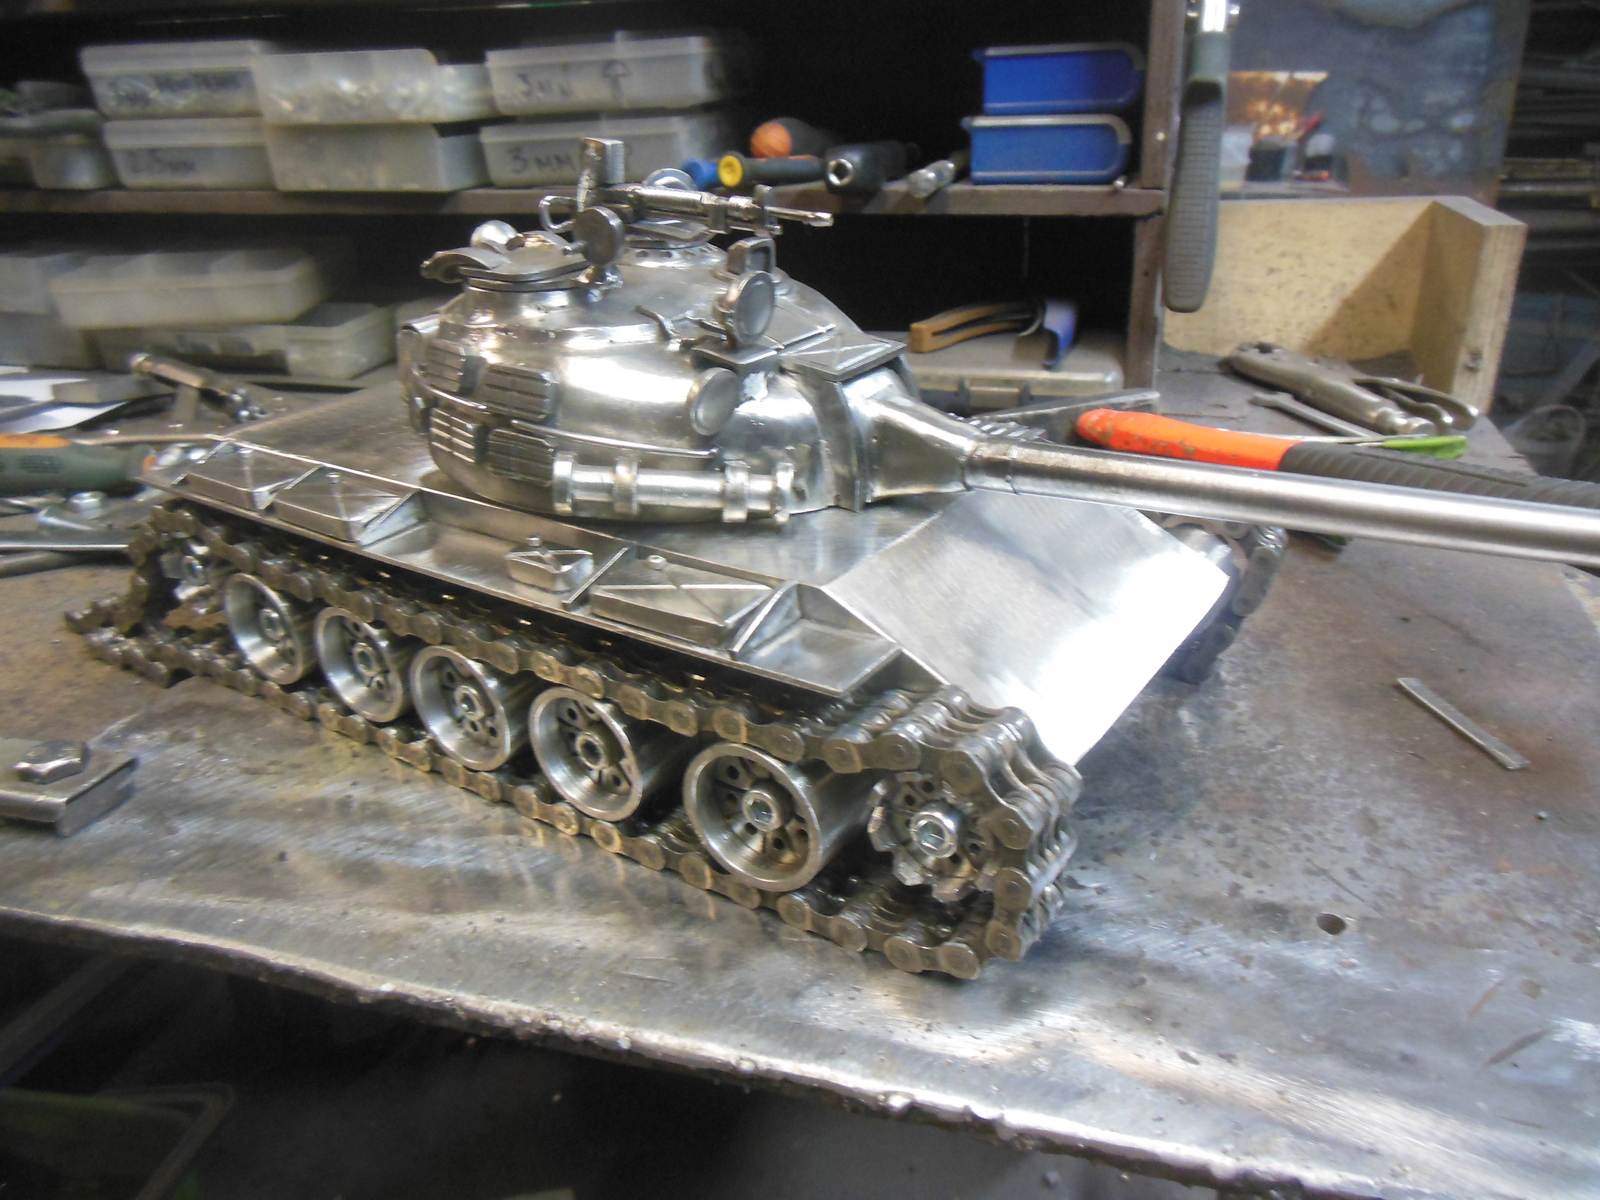 Another tank. - My, Tanks, Welding, T-55, Longpost, Needlework, The photo